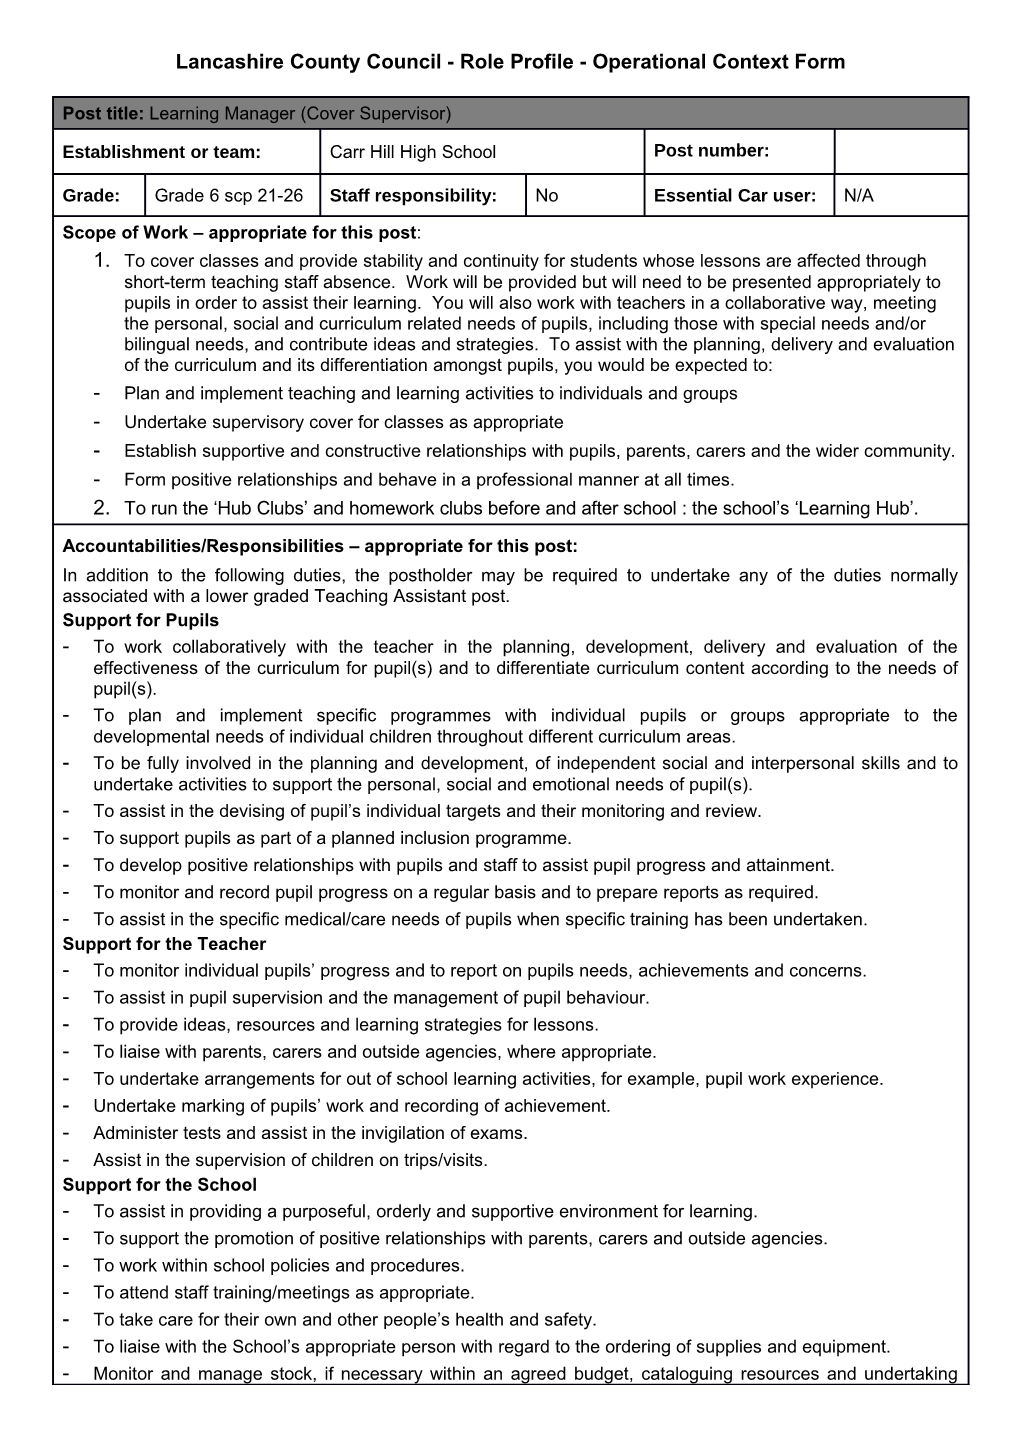 Lancashire County Council - Role Profile - Operational Context Form